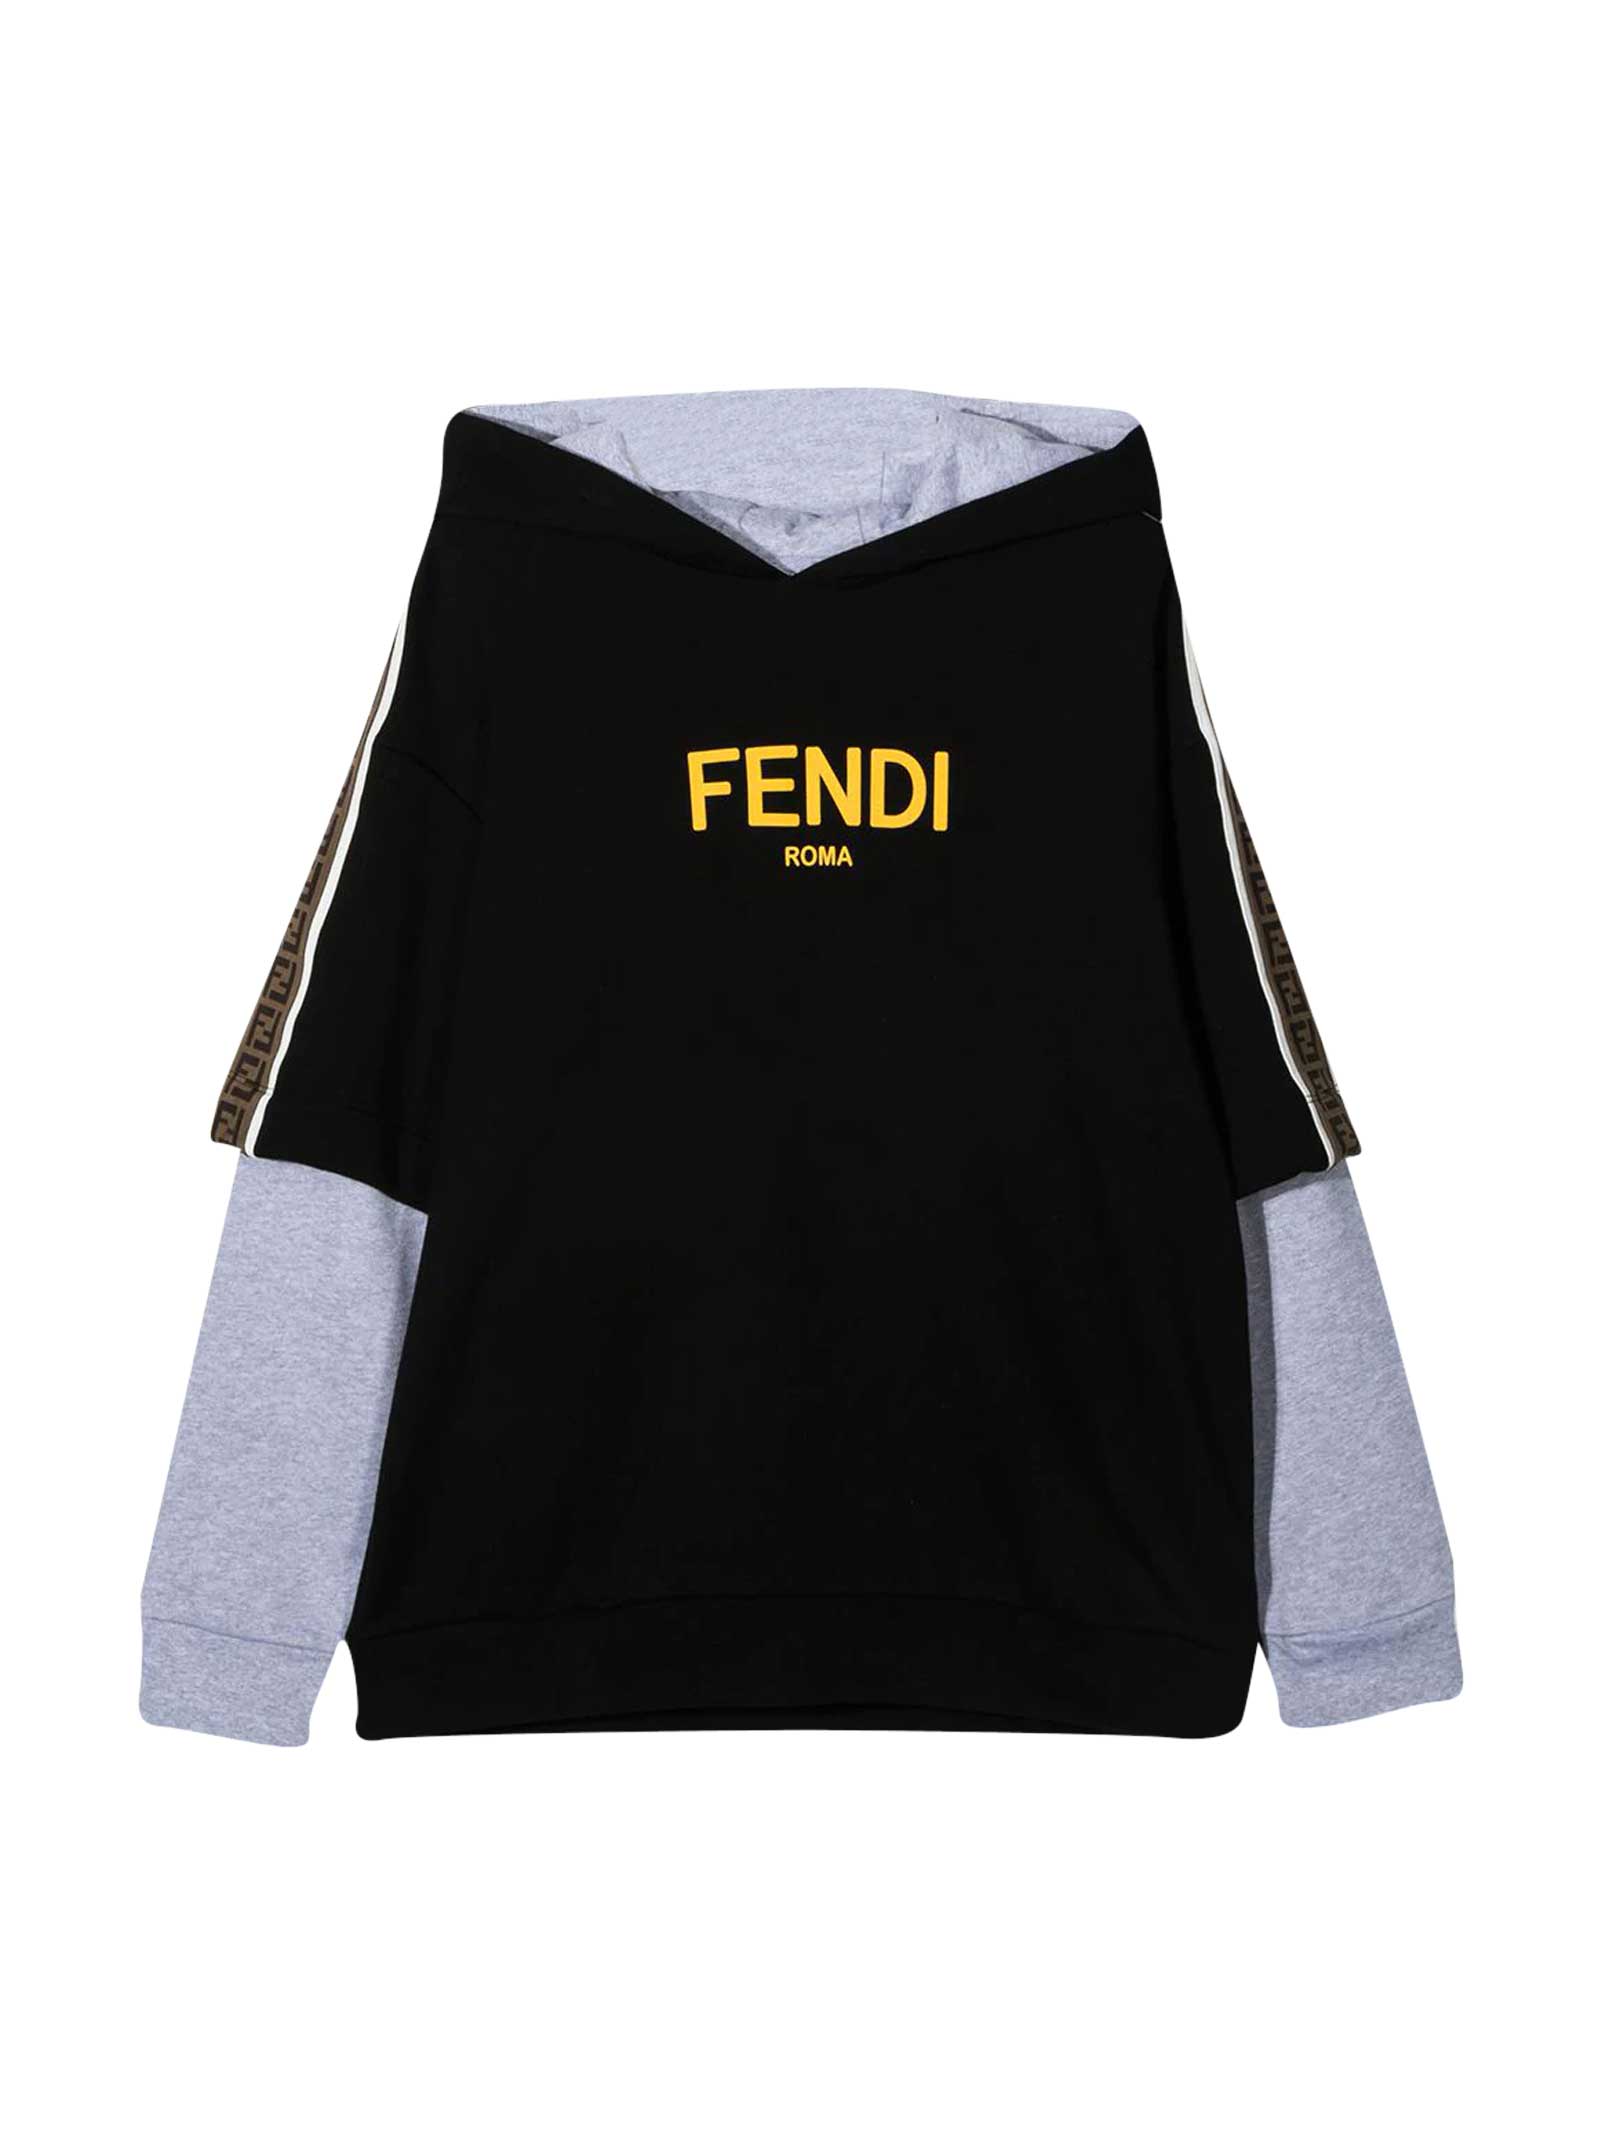 Fendi Black And Gray Sweatshirt With Hood And Front Logo